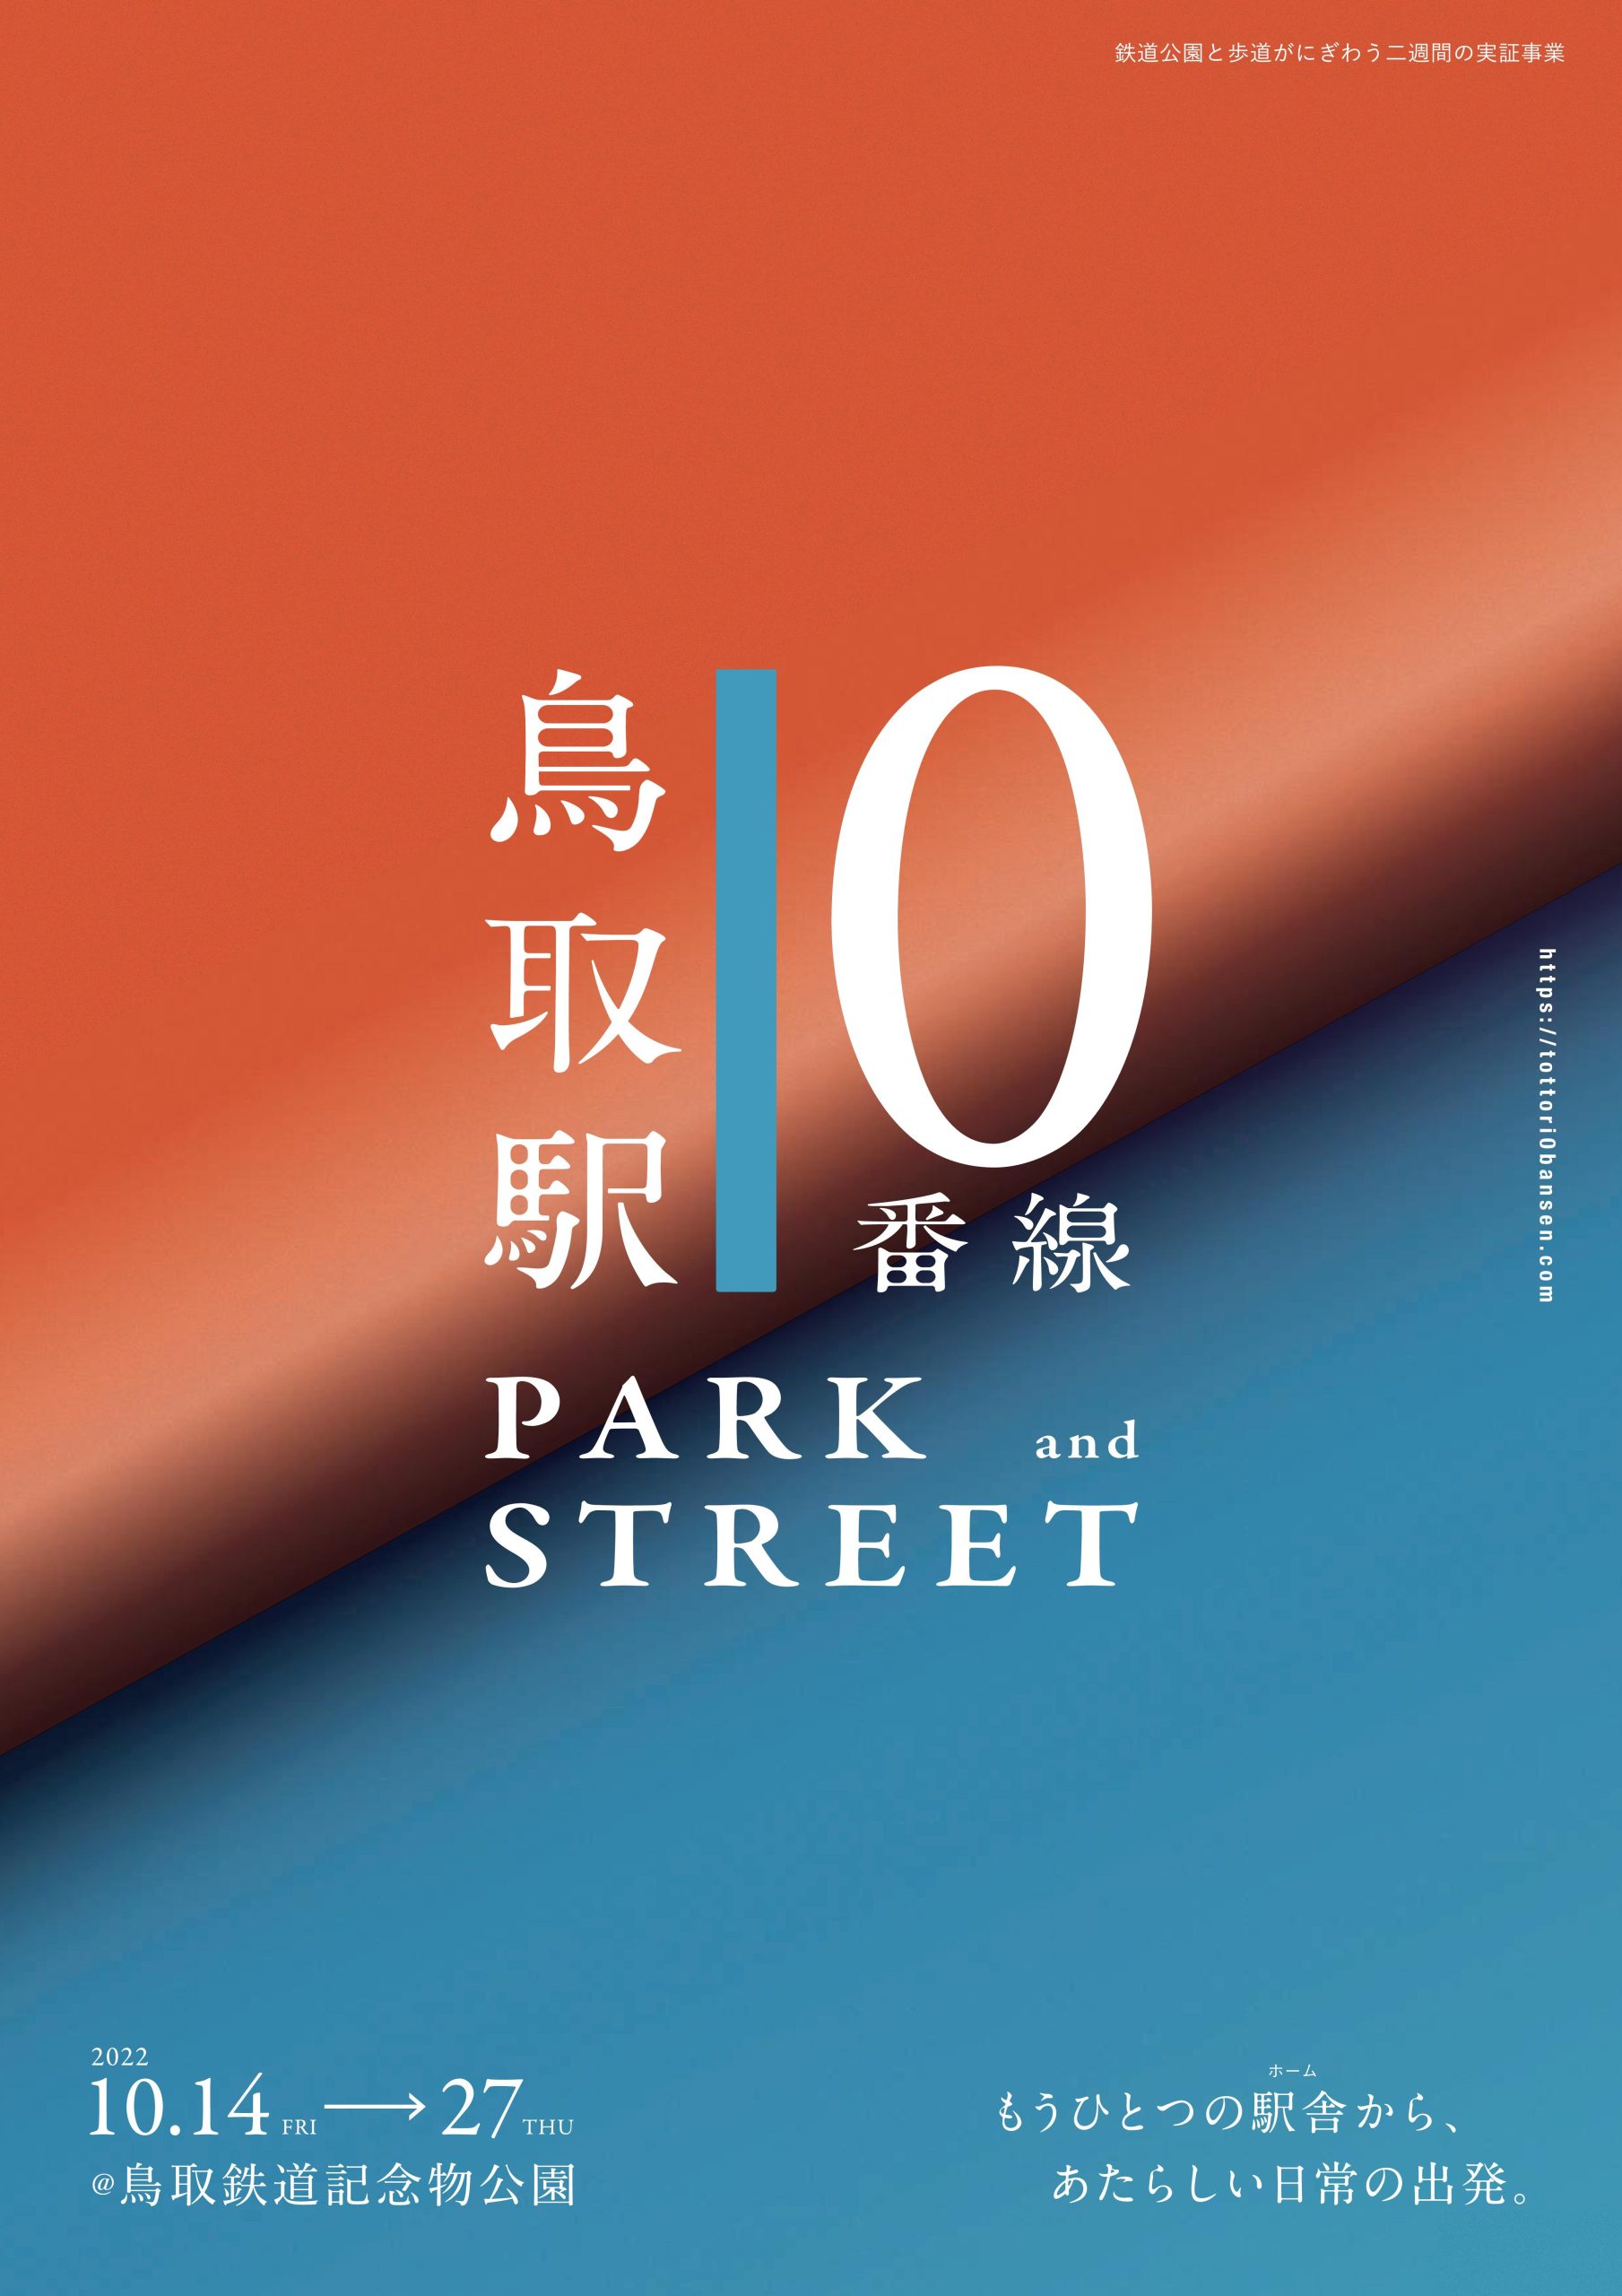 賑わい実証事業『鳥取駅0番線 PARK and STREET』[2022/10/14(金)～27(木)開催]